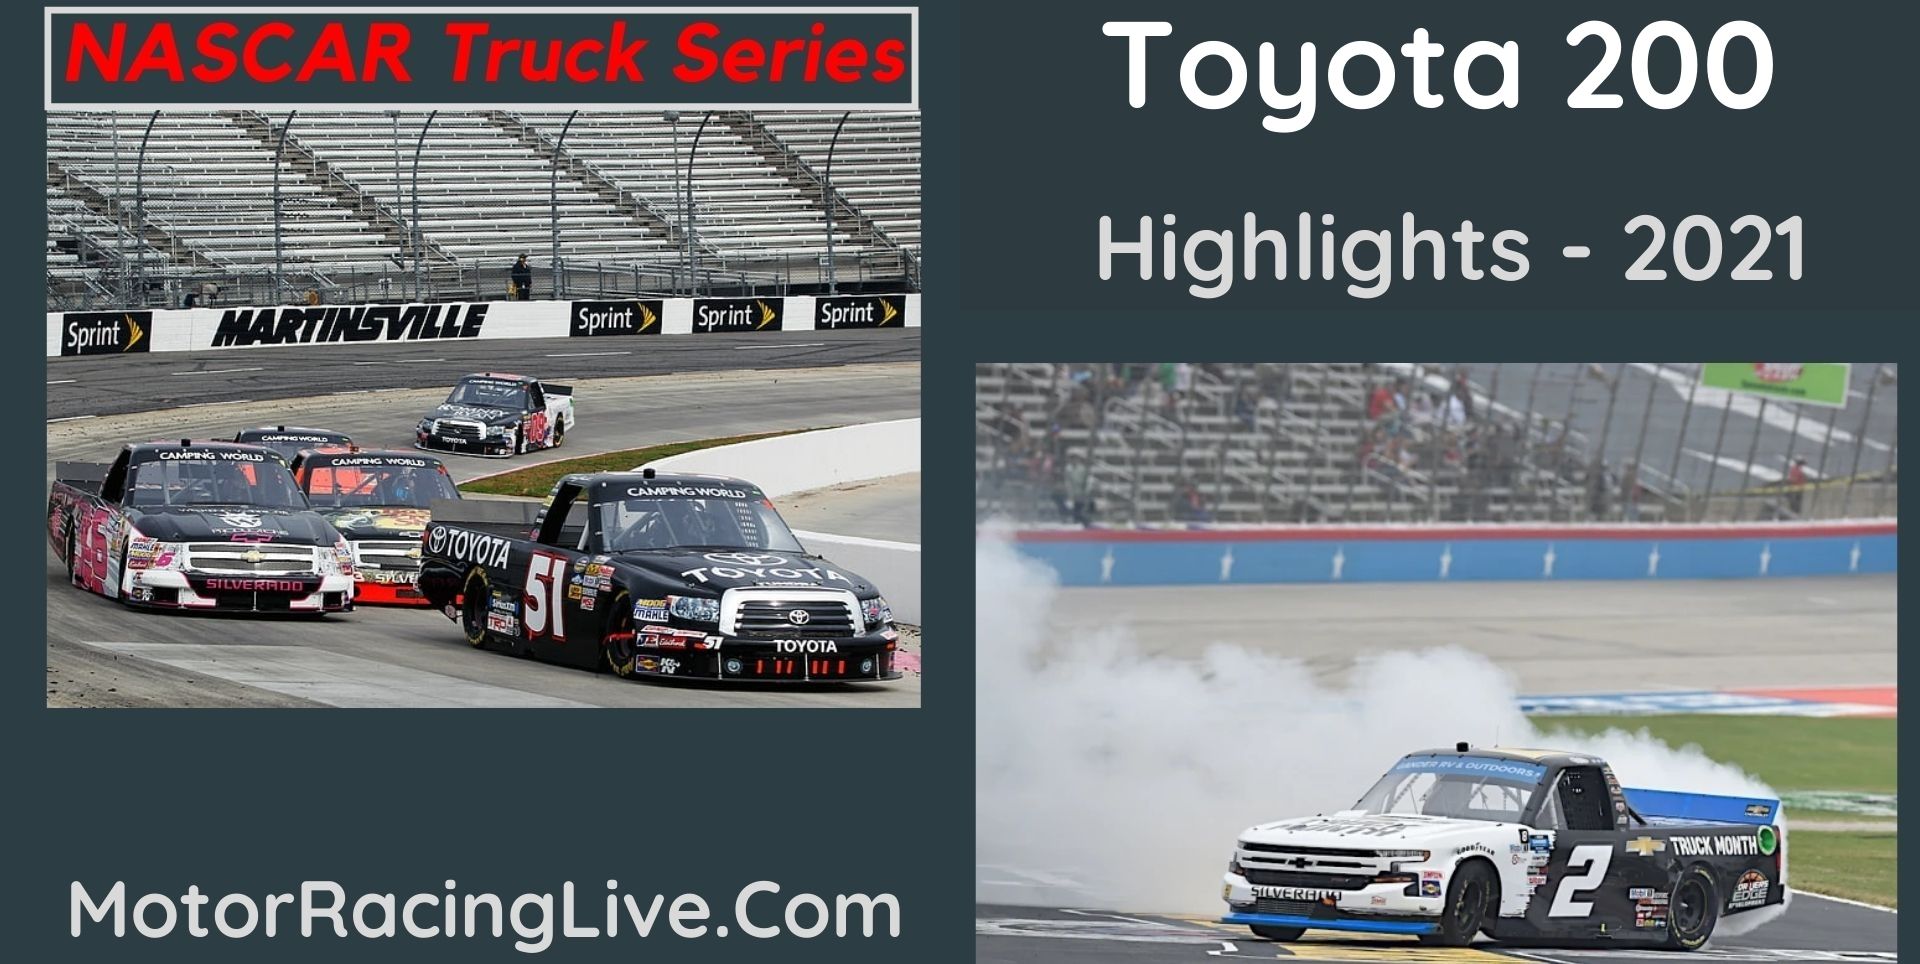 Toyota 200 Highlights 2021 NASCAR Truck Series